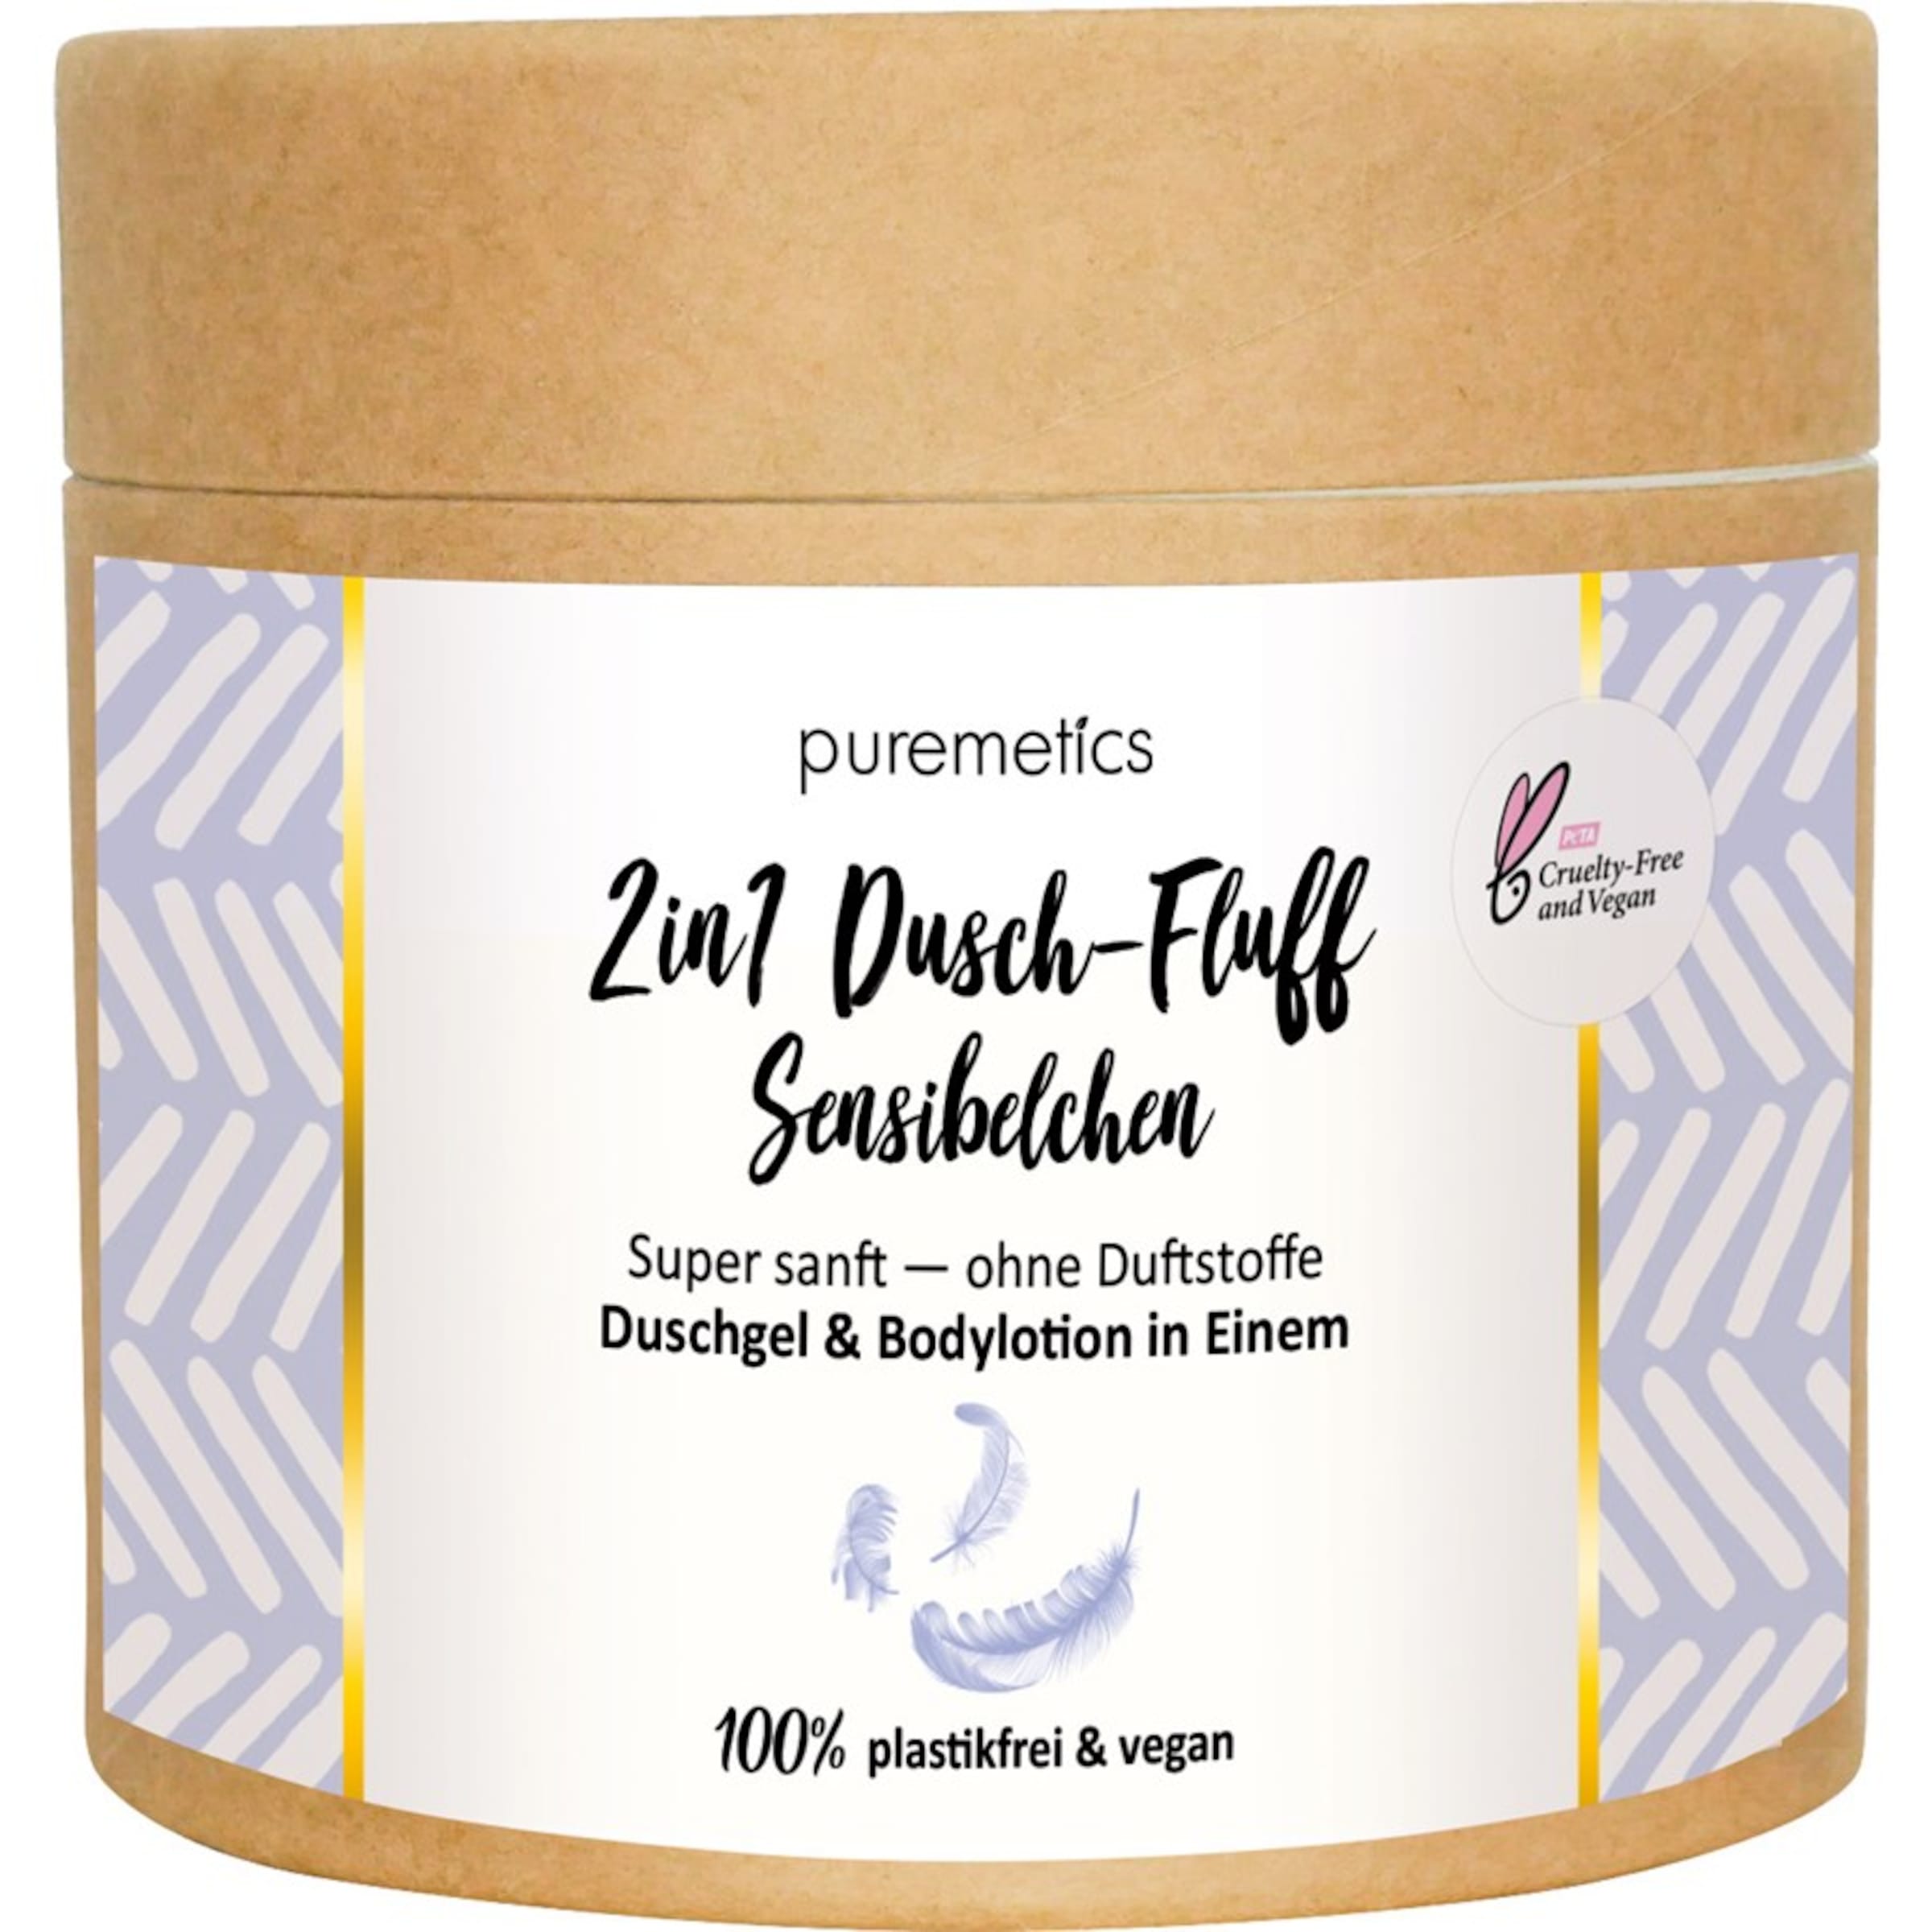 puremetics Duschgel & Bodylotion Sensibelchen 2in1 Dusch-Fluff in 